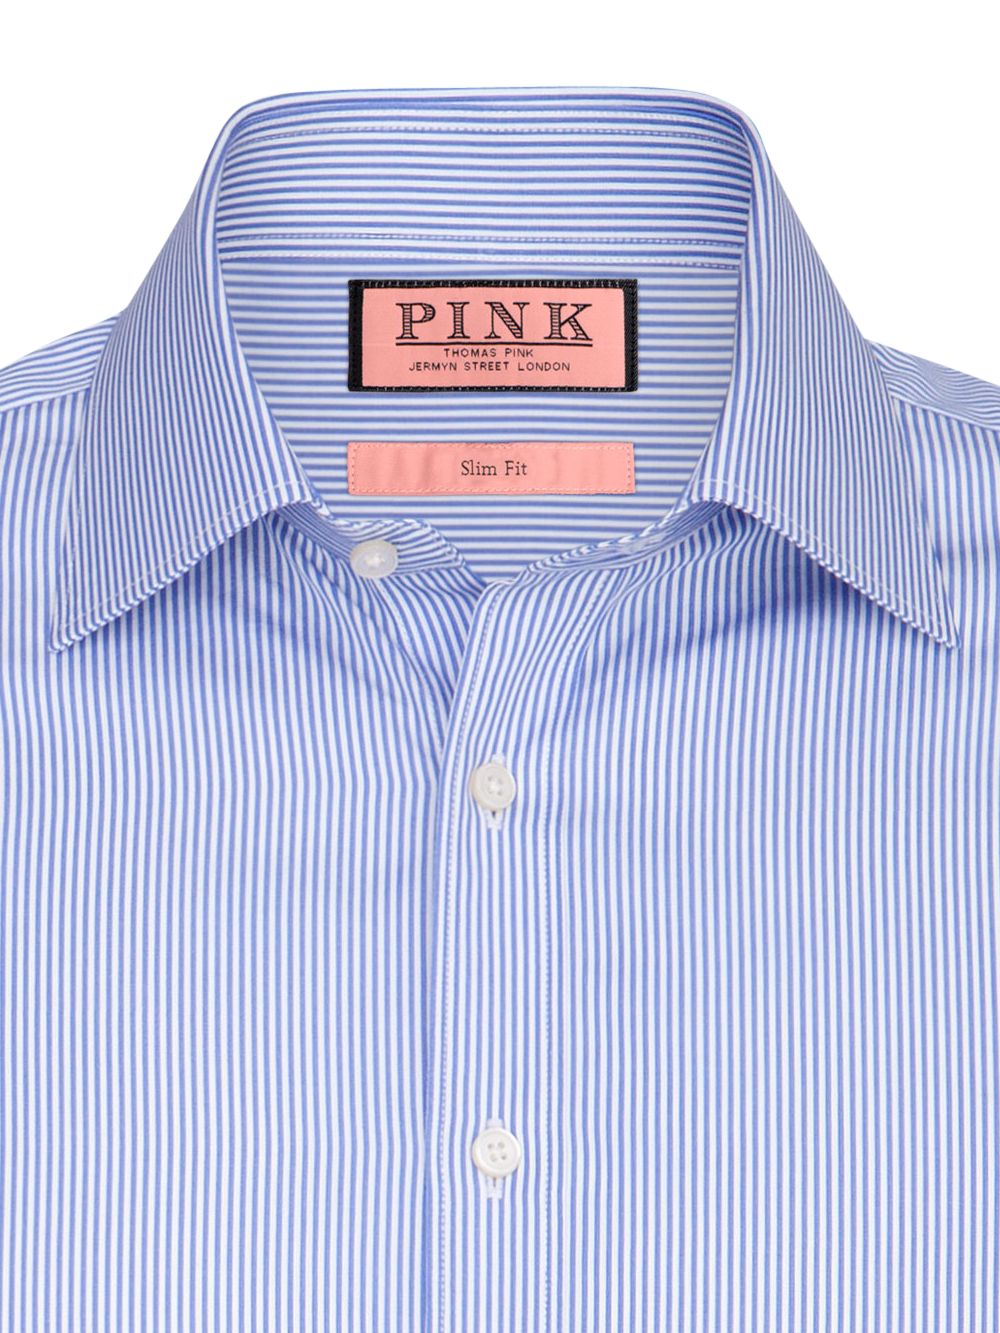 Thomas Pink, Shirts, Thomas Pink Check Pattern Pink Dress Shirt